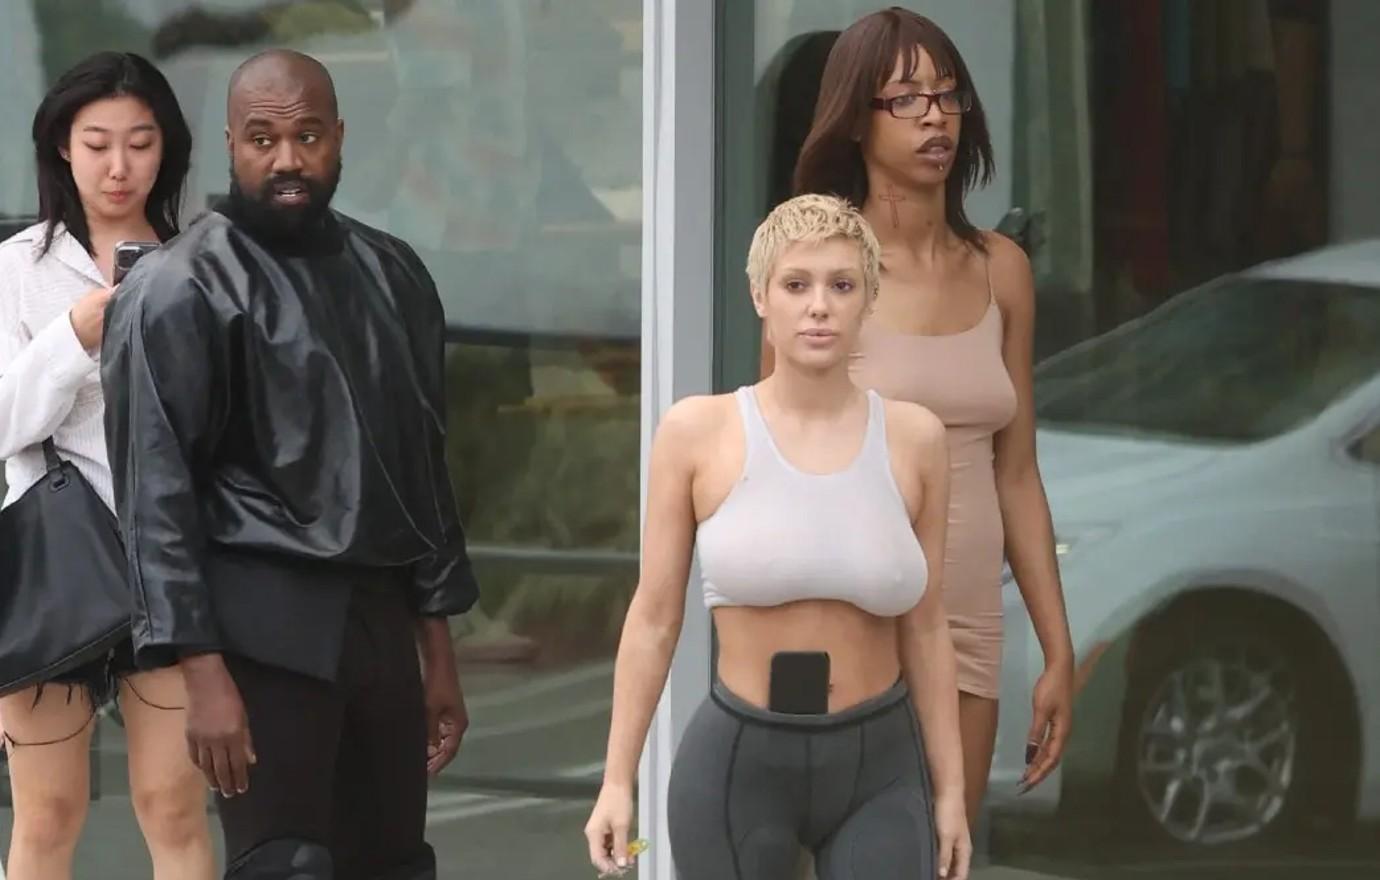 Kanye West treats pantsless wife Bianca Censori to a shopping trip